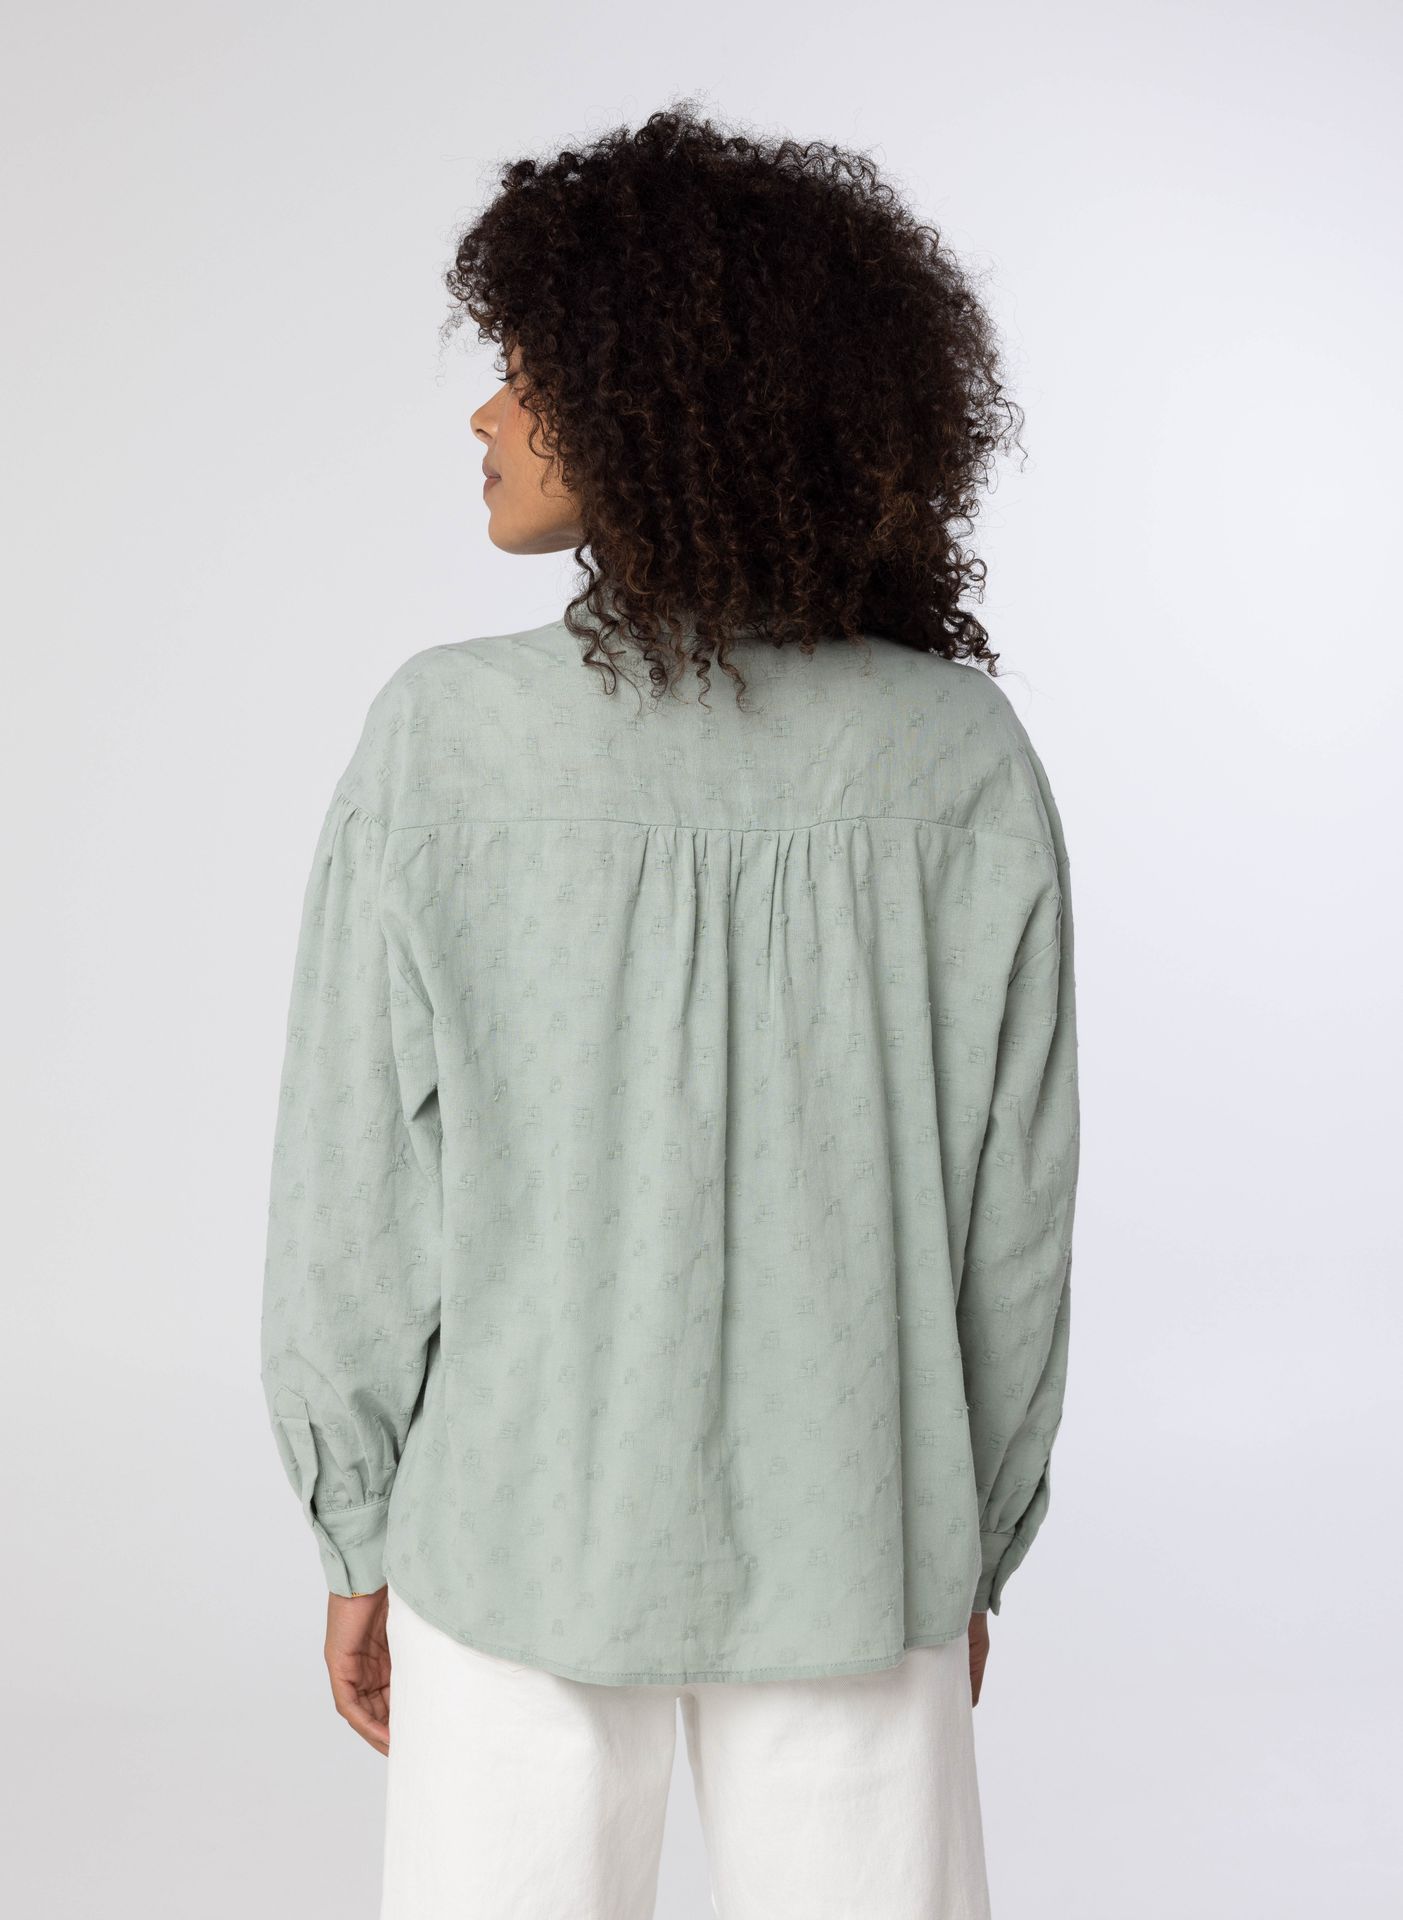 Norah Groene blouse green 214355-500